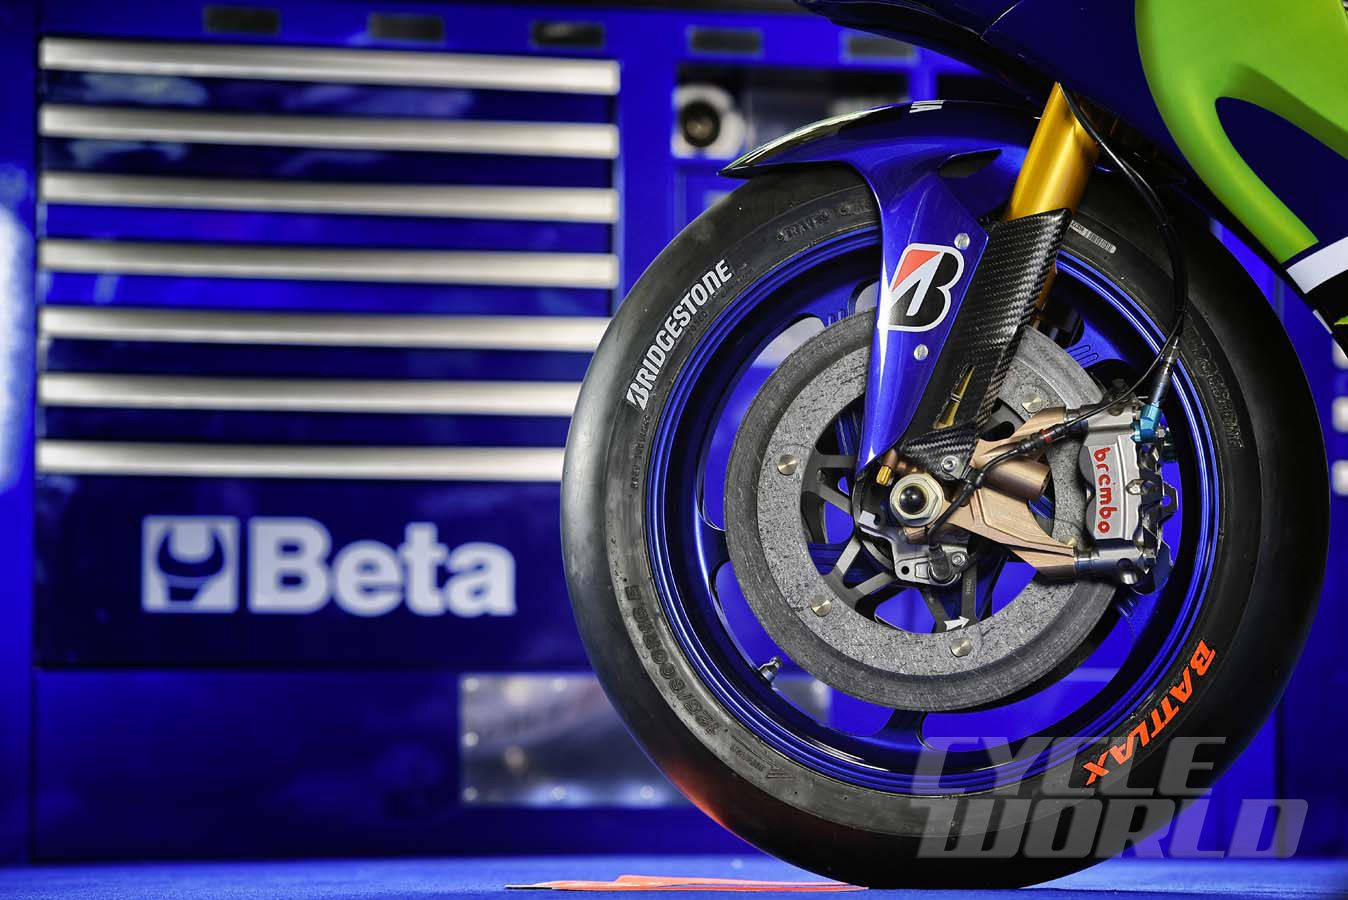 Motocicletabridgestone Yamaha Fondo de pantalla